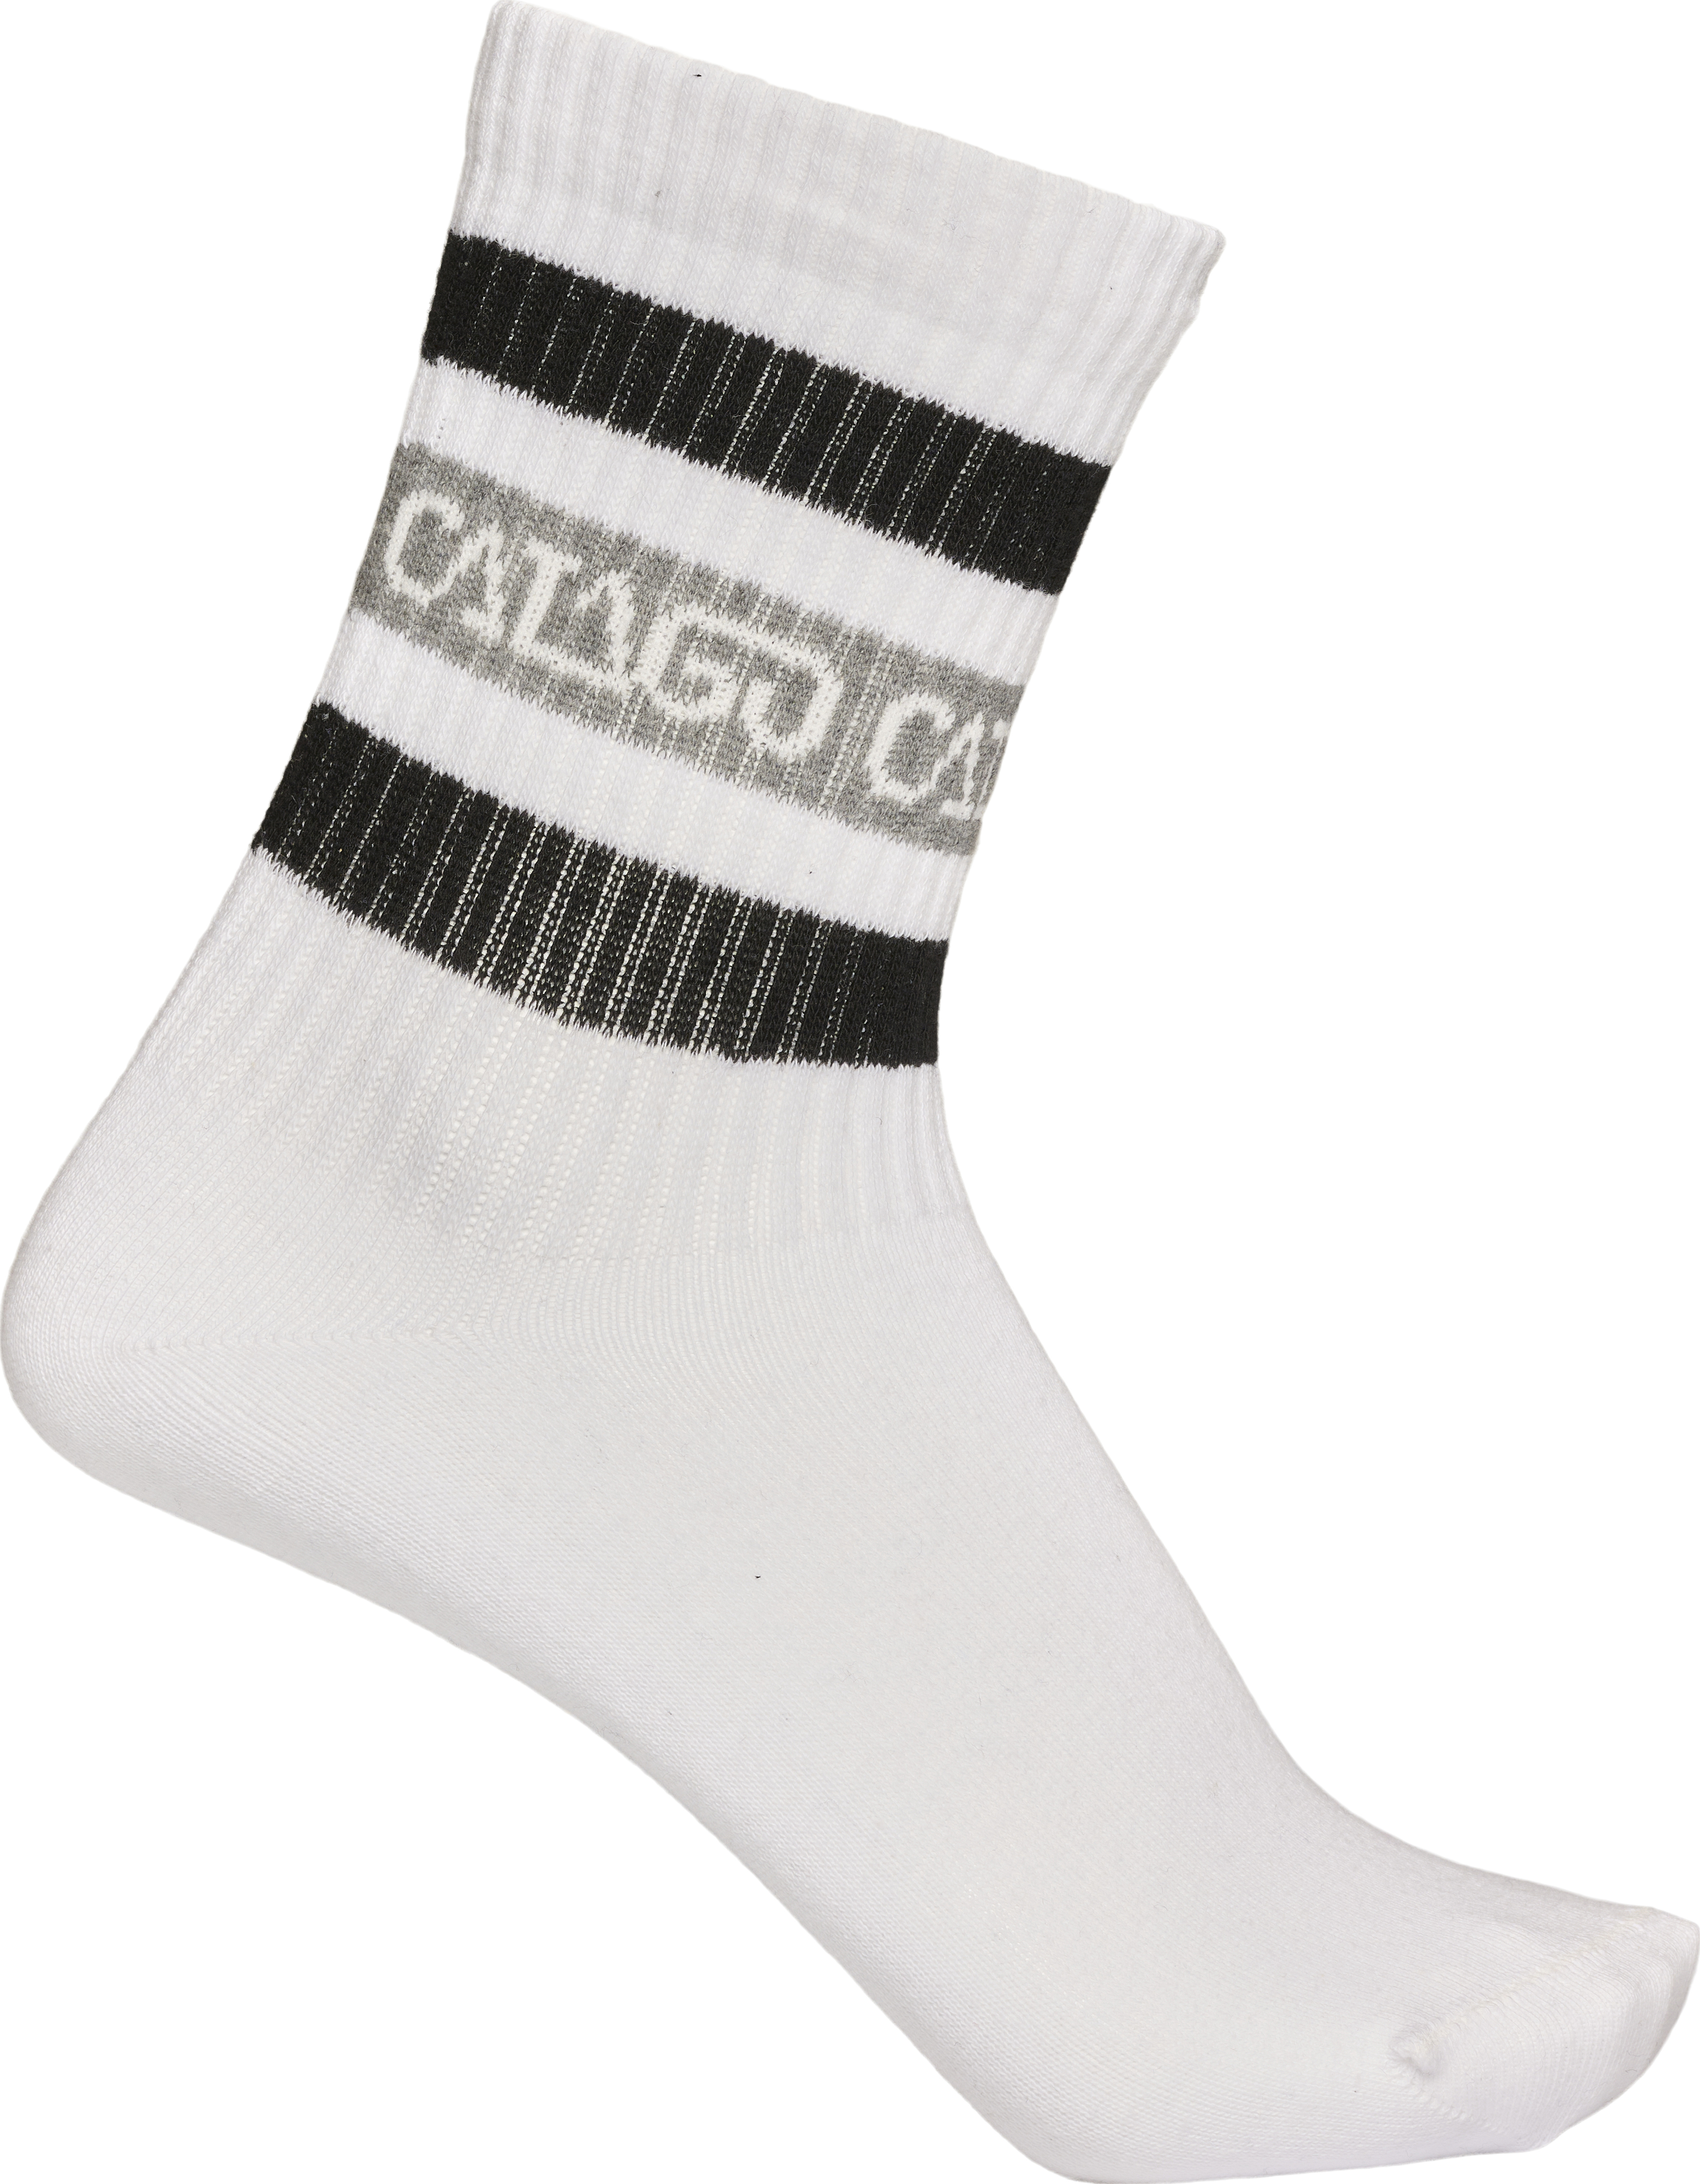 CATAGO Polly Logo Mid Length Socks - White (37-40), Catago